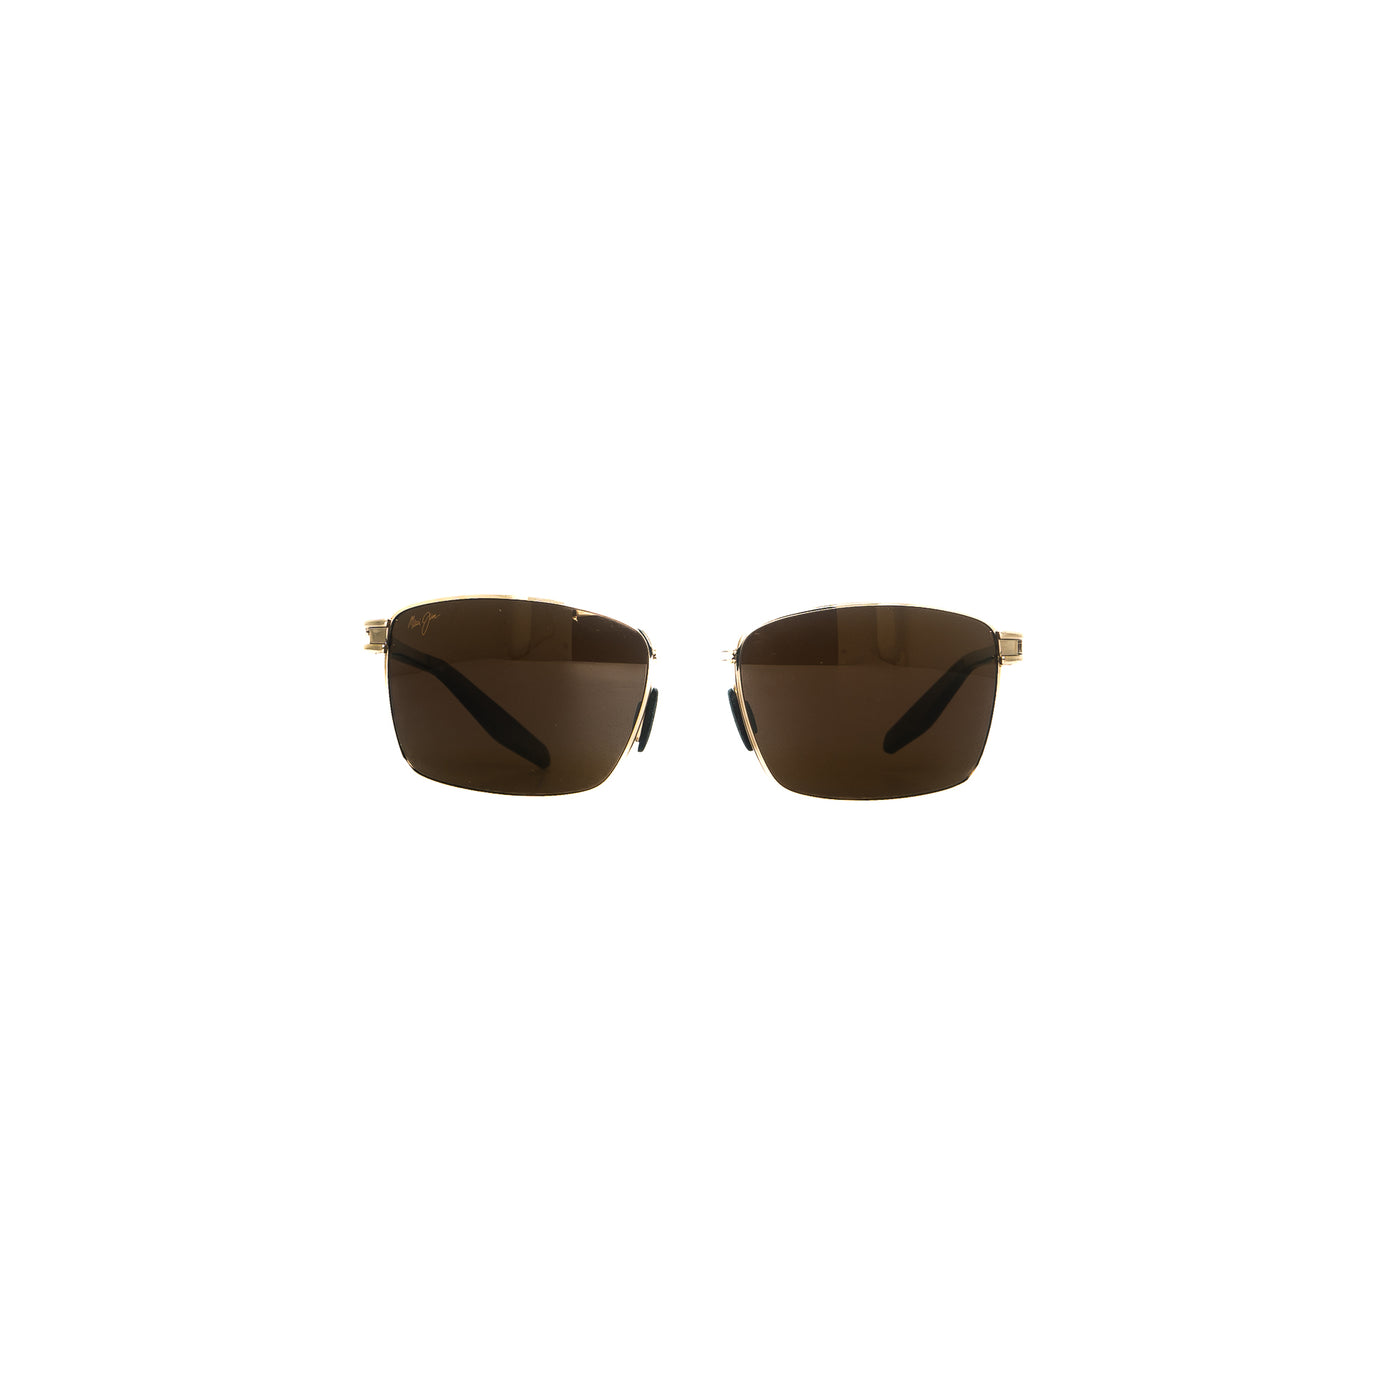 Maui Jim MJ531/16 Polarized | Sunglasses - Vision Express Optical Philippines